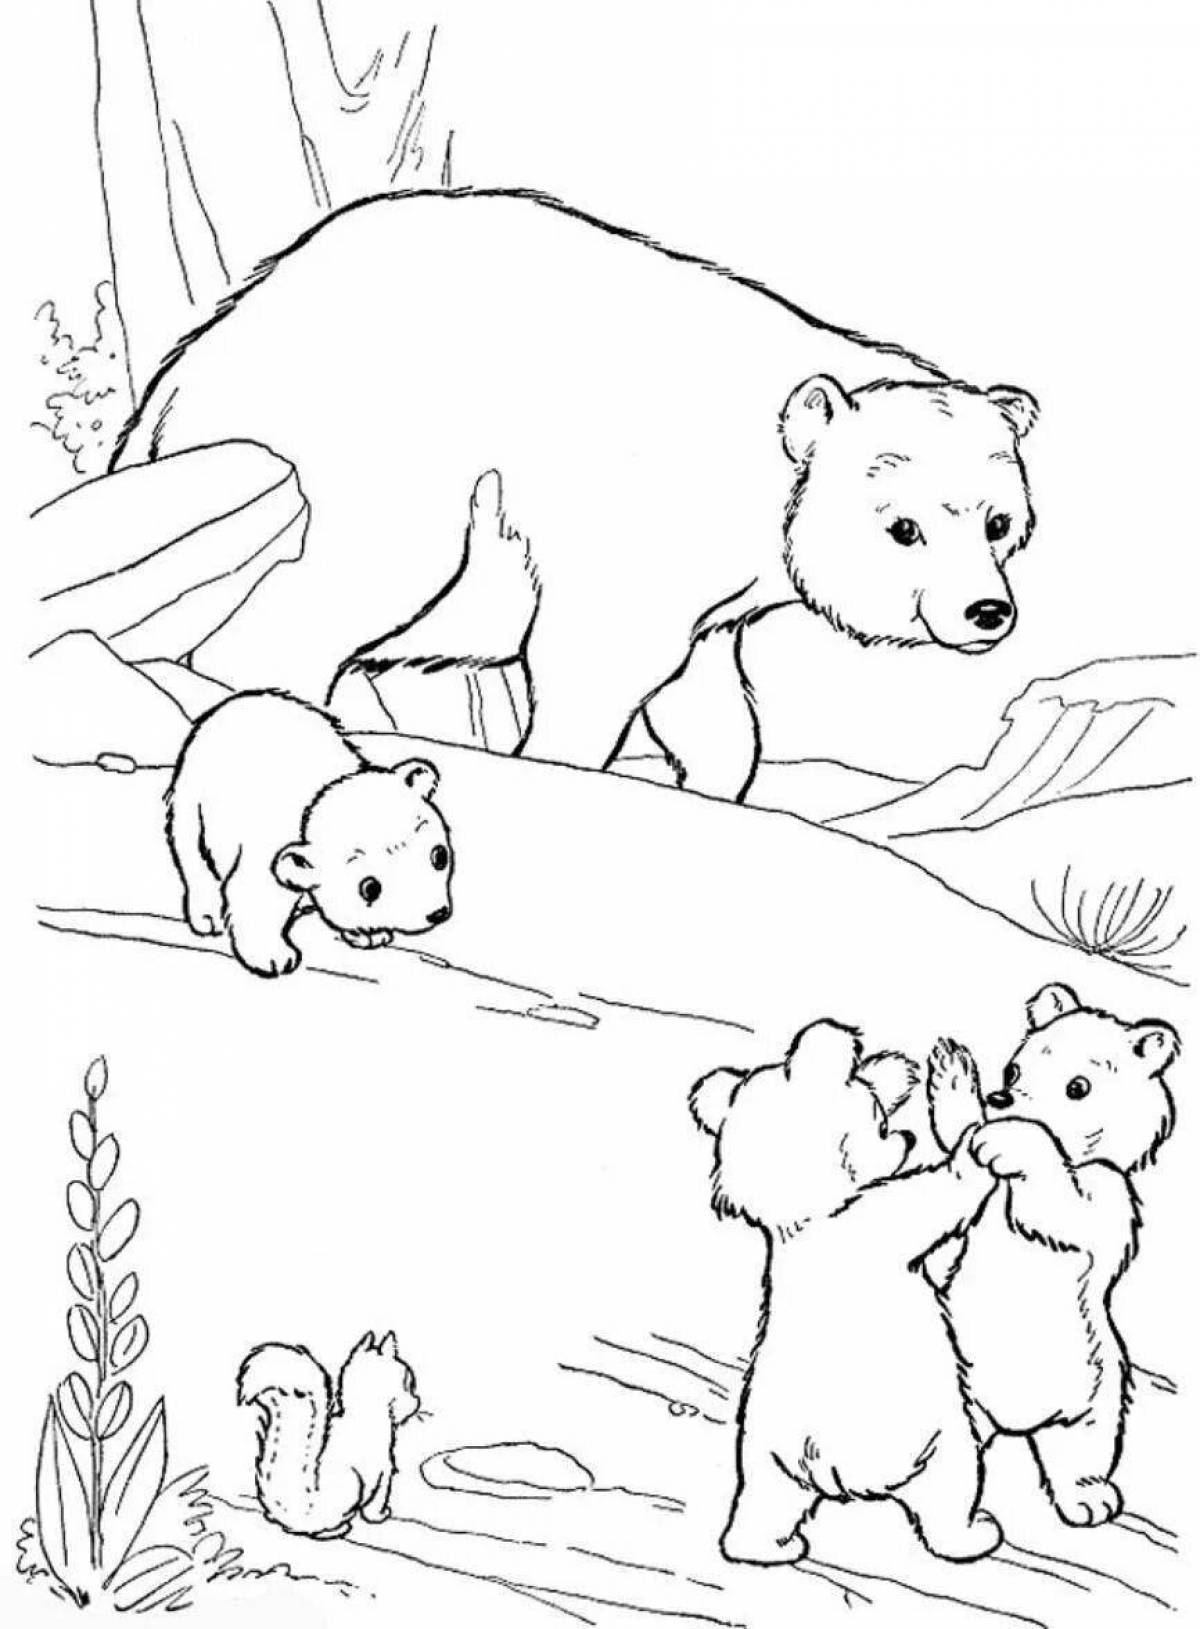 Furry bear animal coloring book